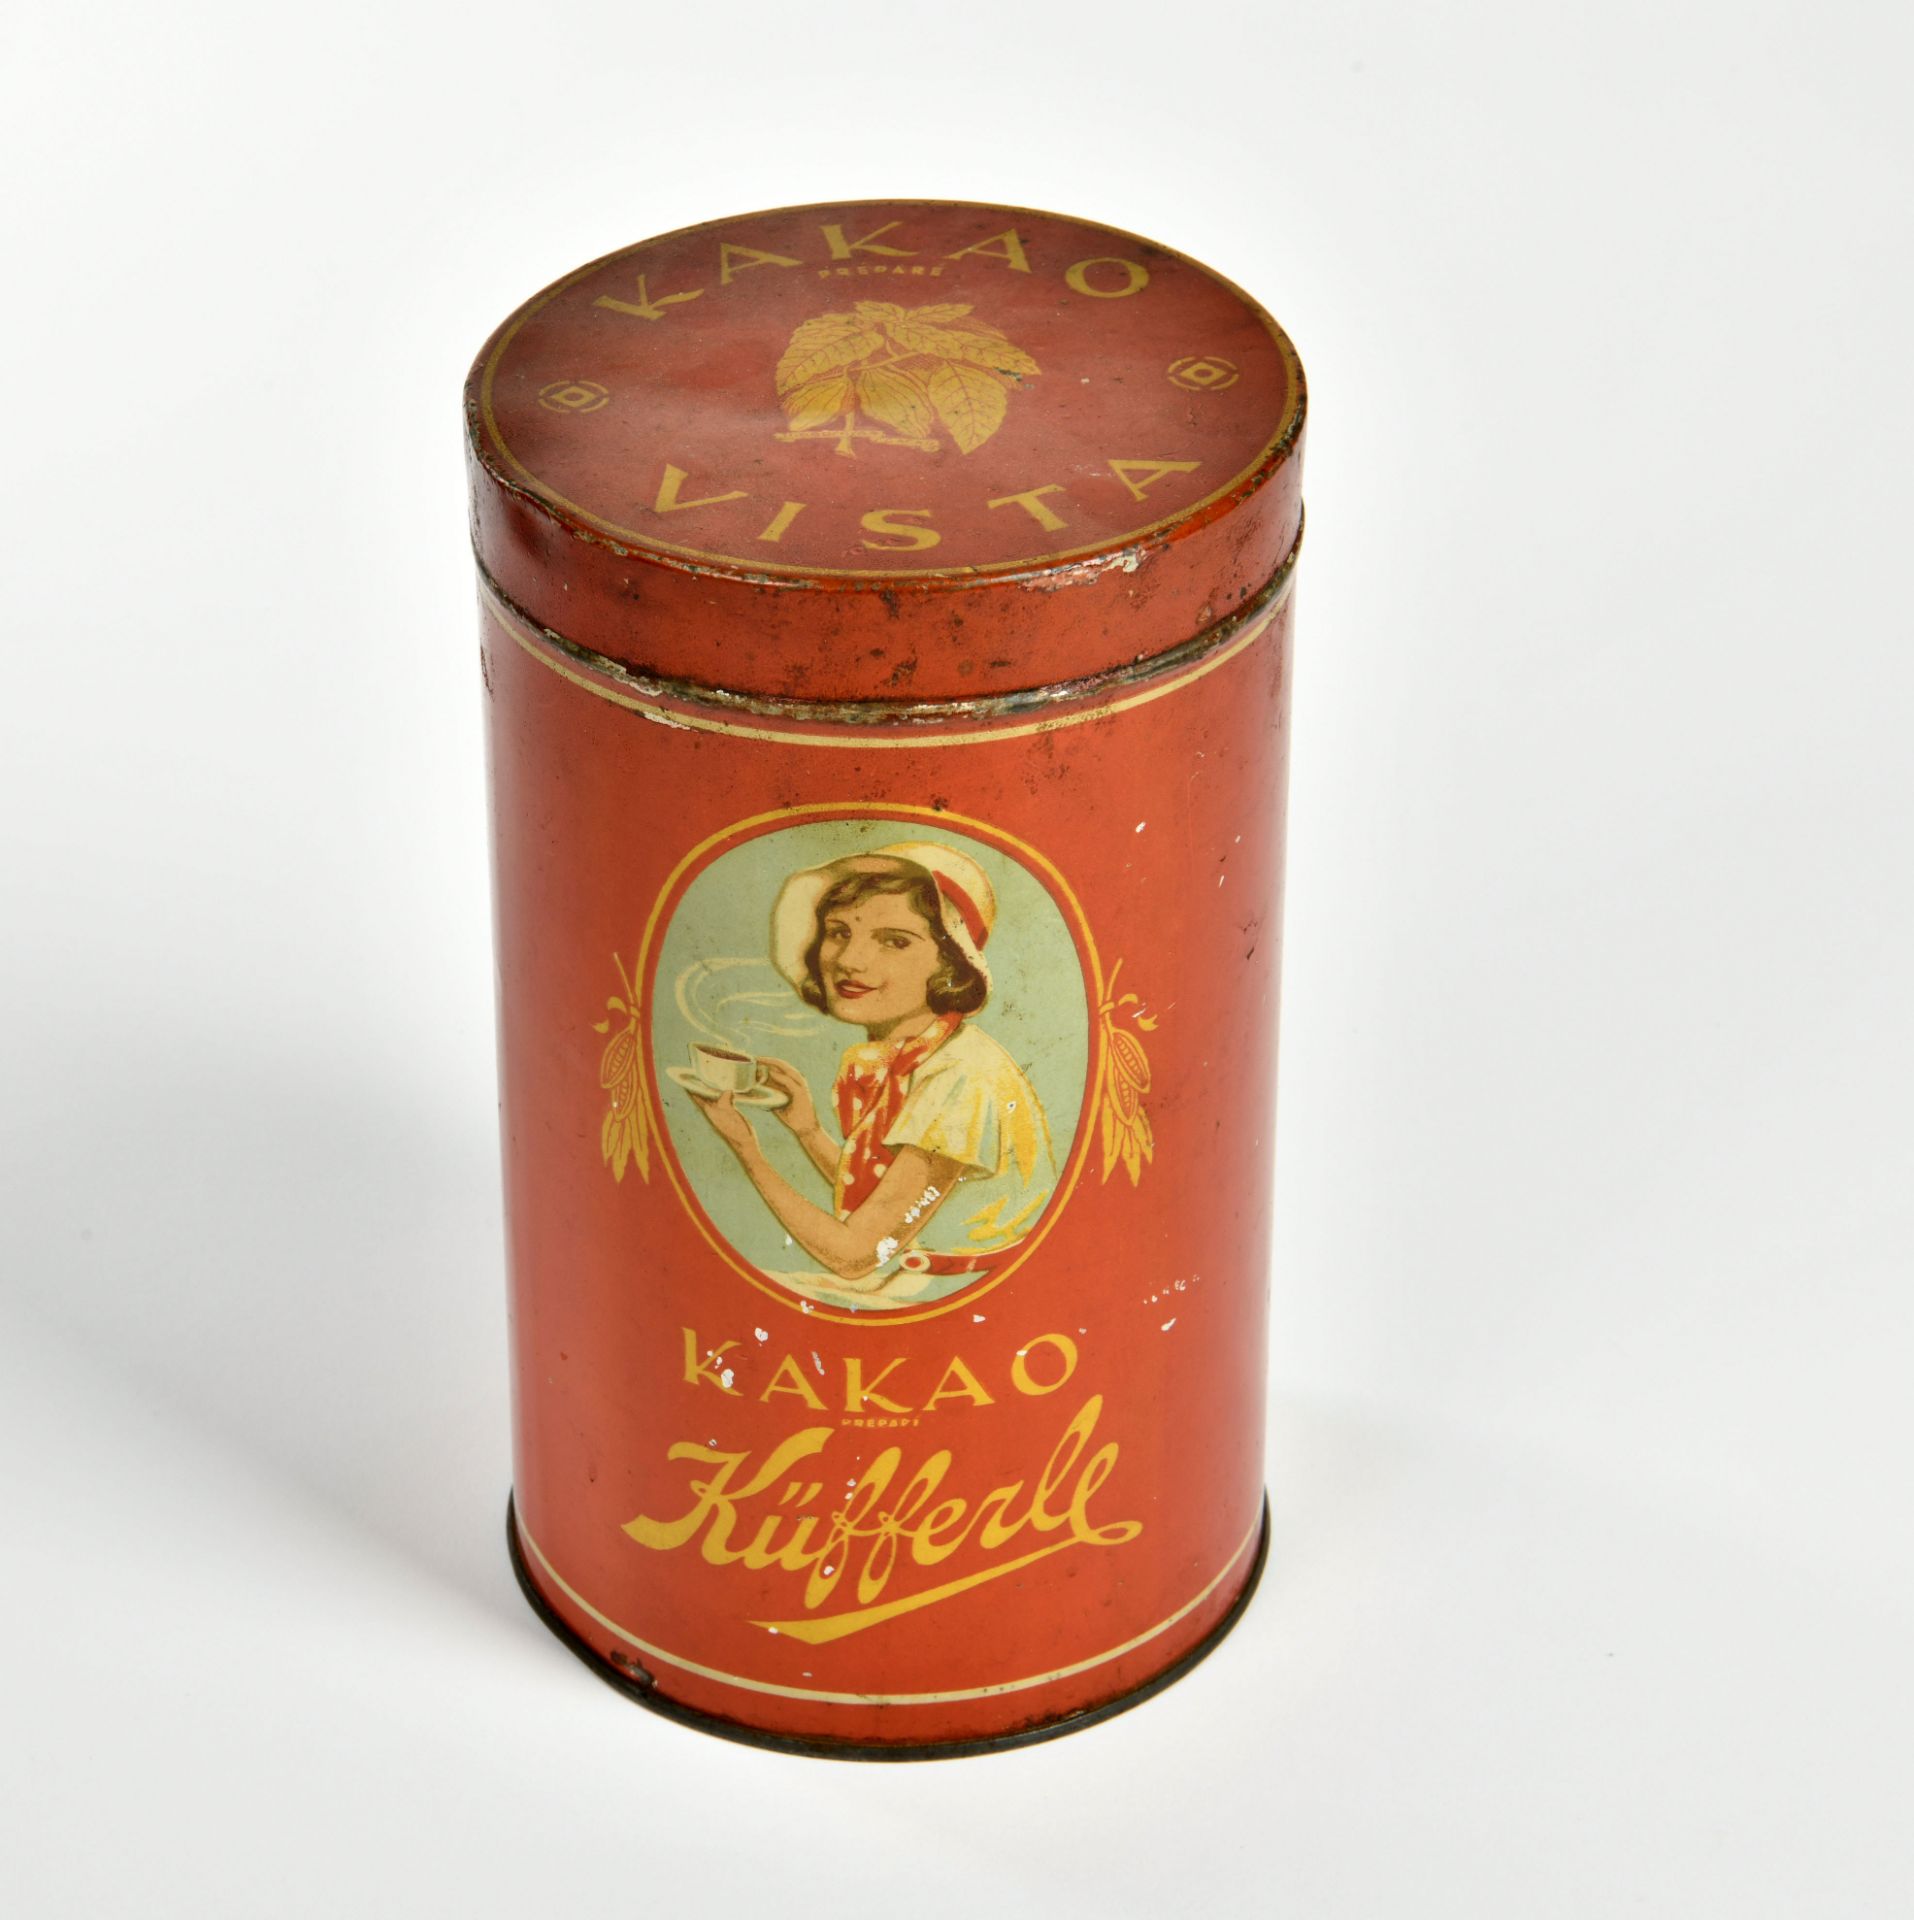 Cacao tin can "Küfferle Kakao", Germany pw, 20 cm, min. paint d., around 1930, C 1-2